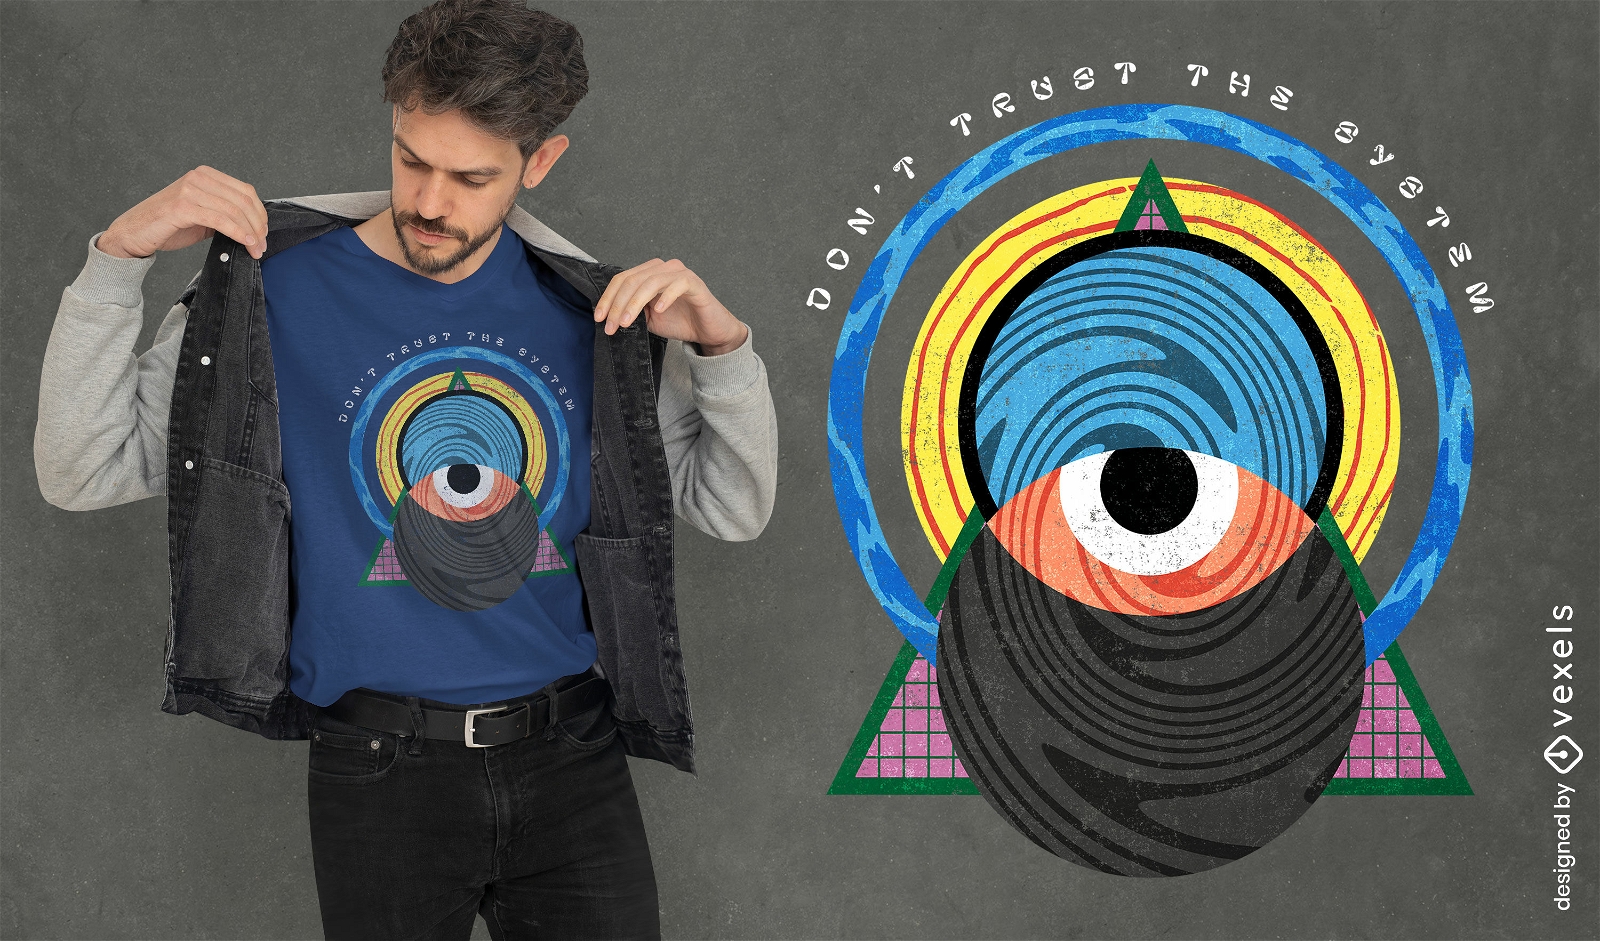 Illuminati abstract shapes t-shirt design